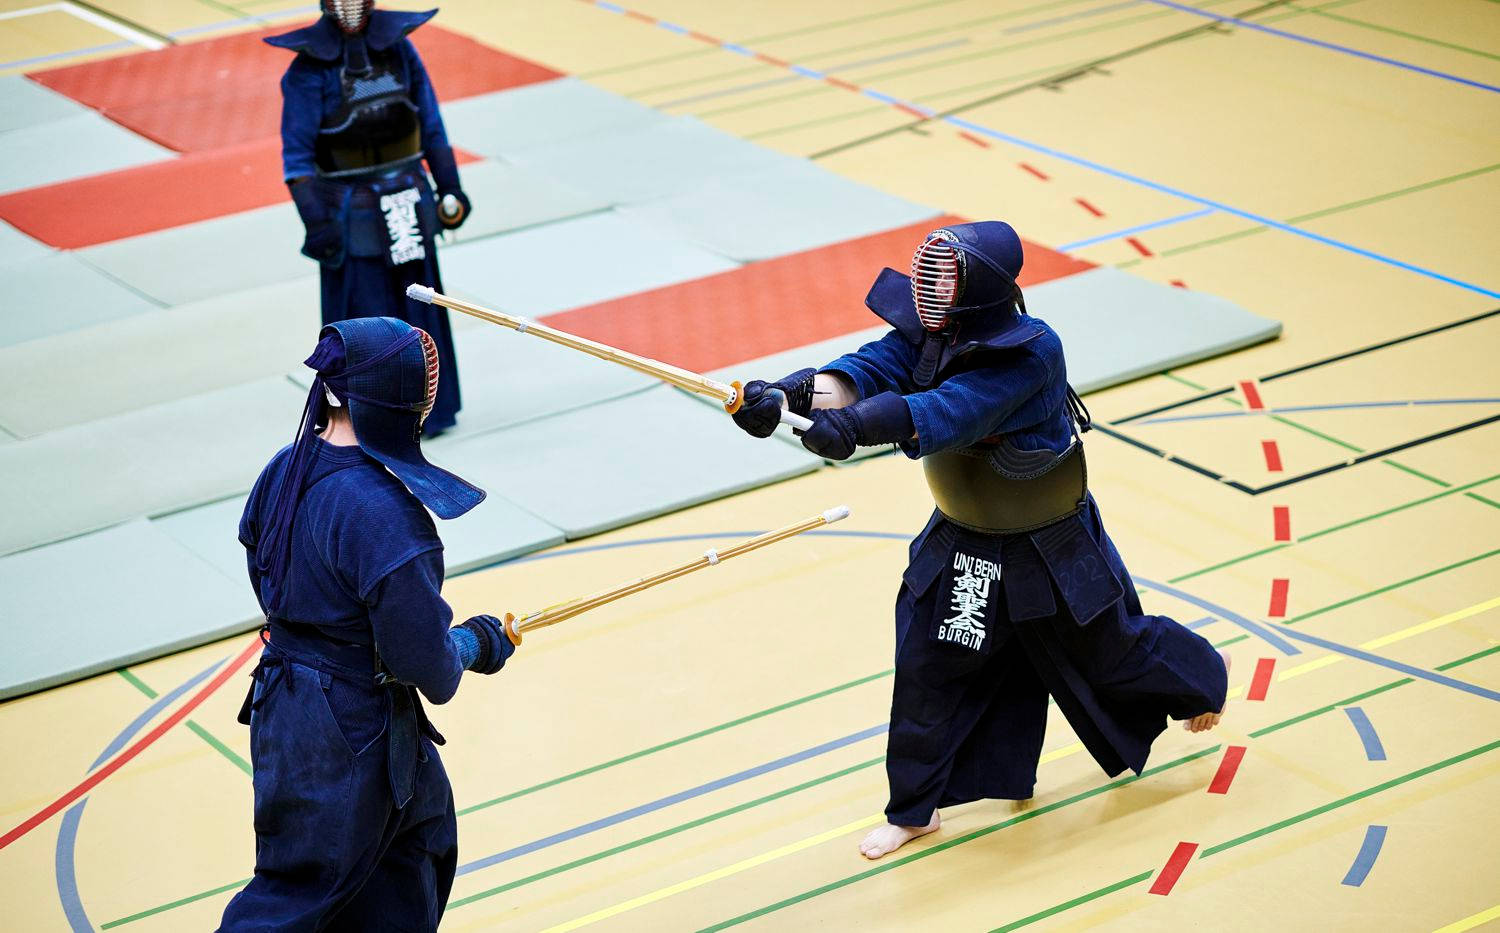 Universitätvon Bern - Japanische Kampfkunst Kendo Wallpaper